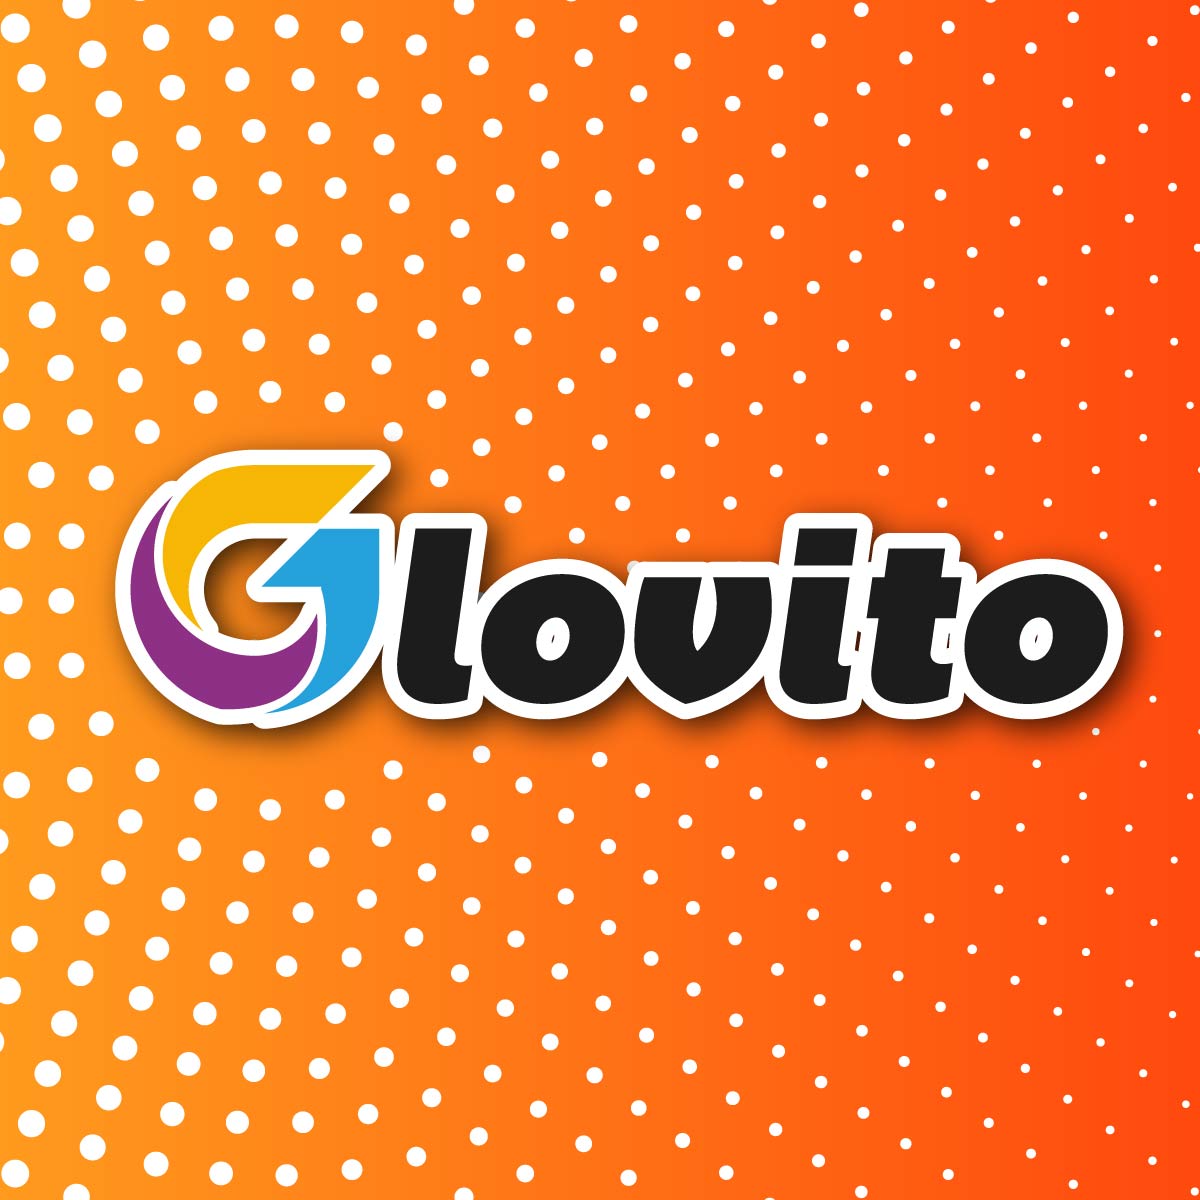 Glovito.com Brand Name